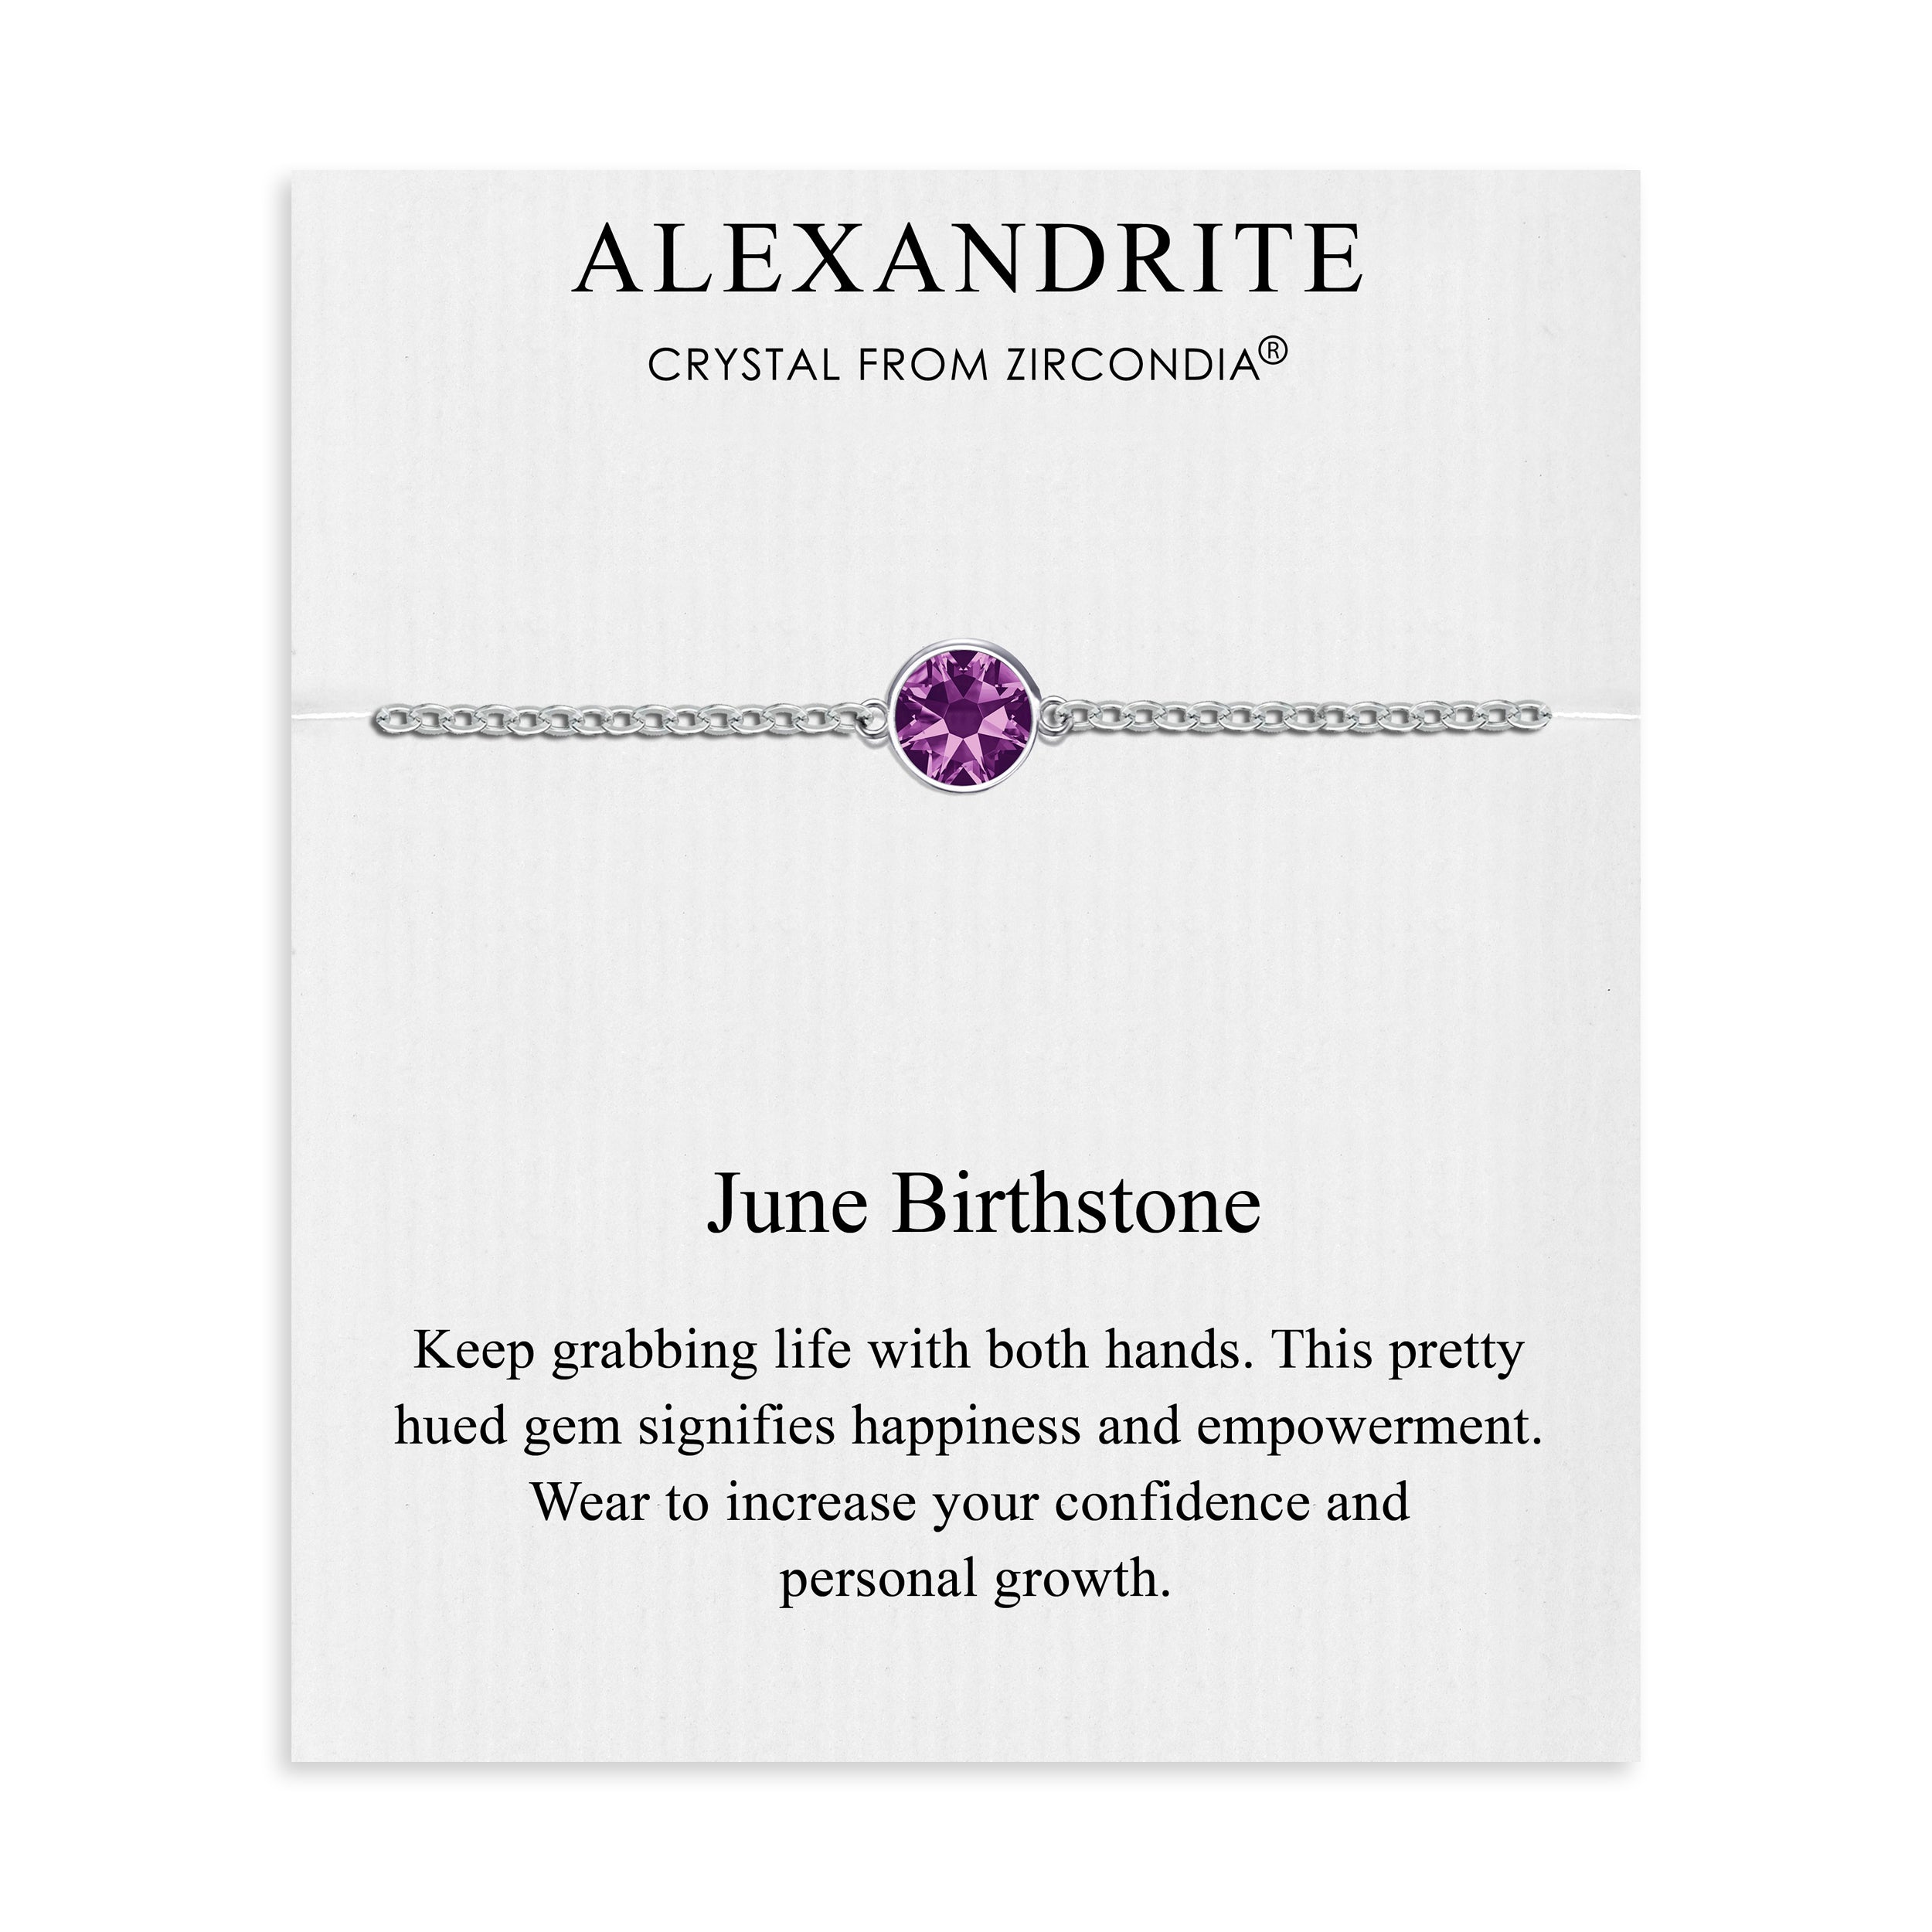 June (Alexandrite) Birthstone Anklet Created with Zircondia® Crystals by Philip Jones Jewellery